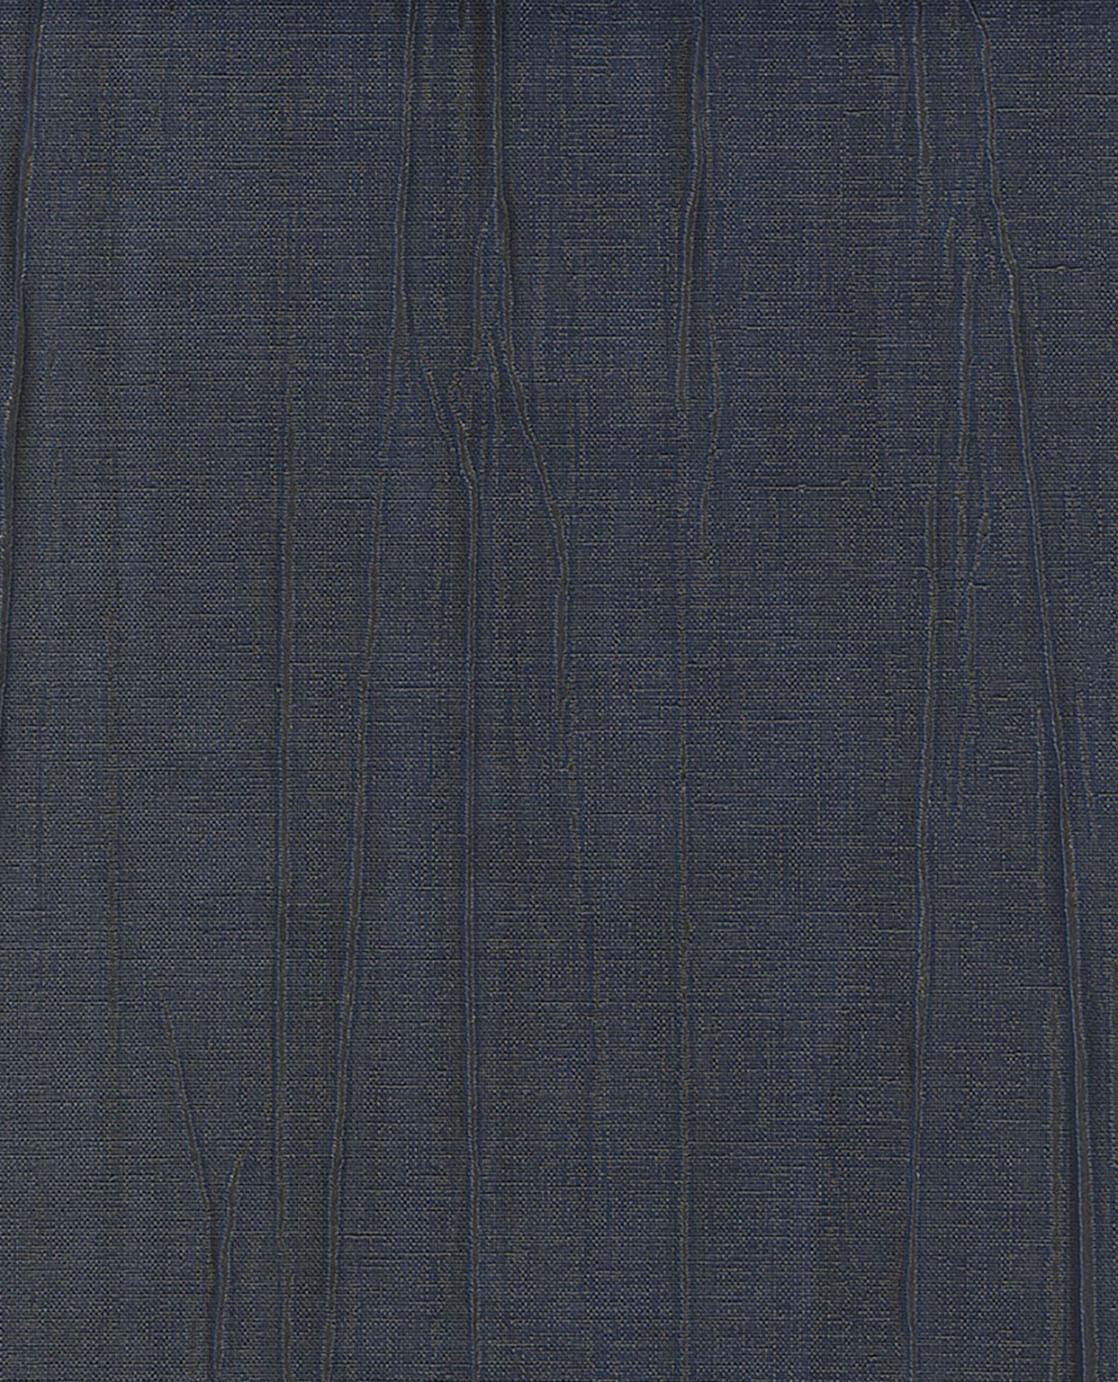 Wrinkled Textile - Dark Blue